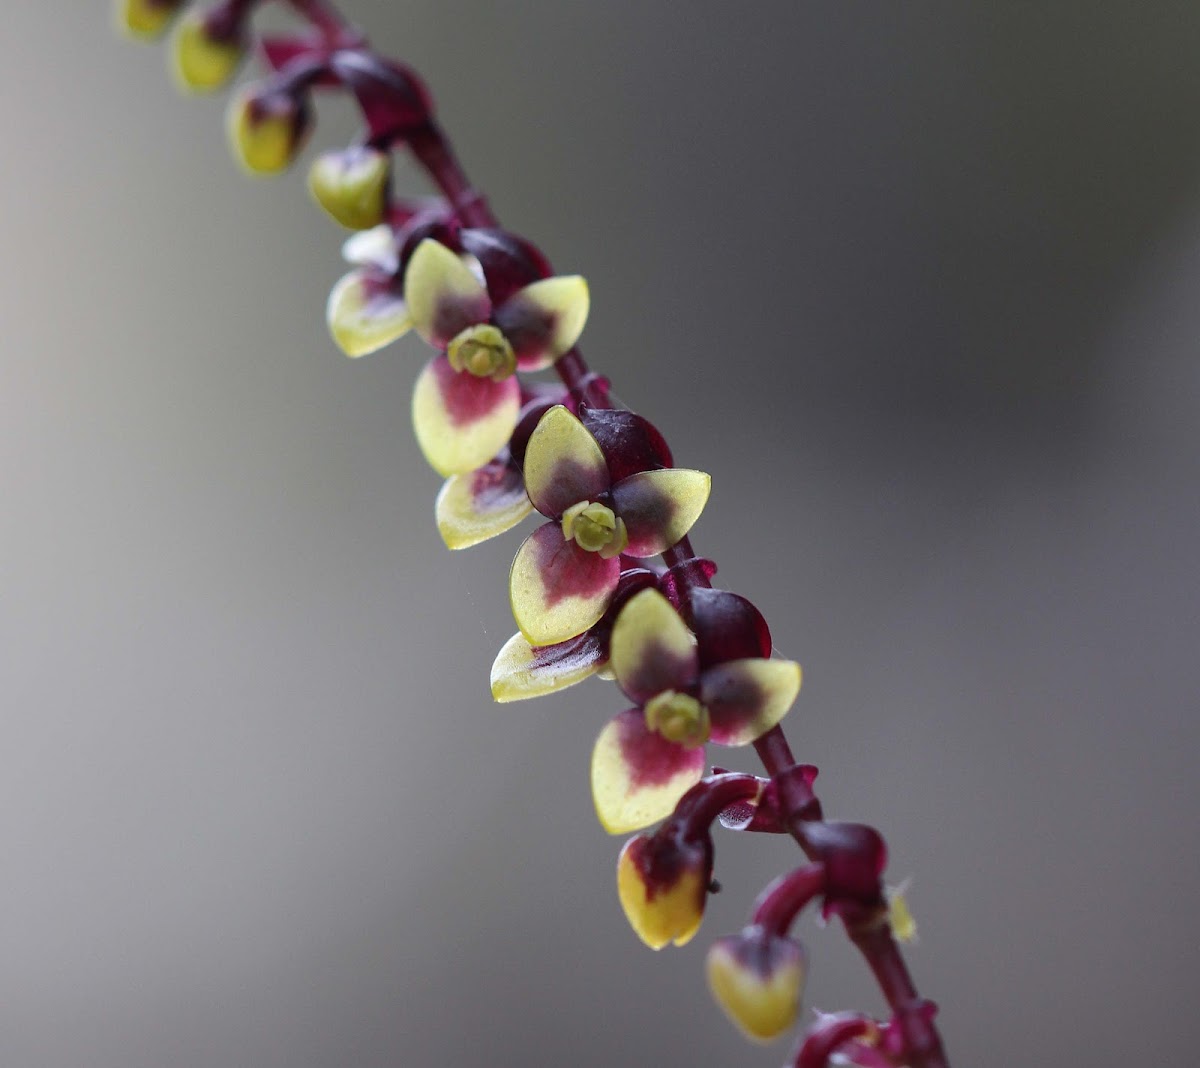 Mistletoe orchid